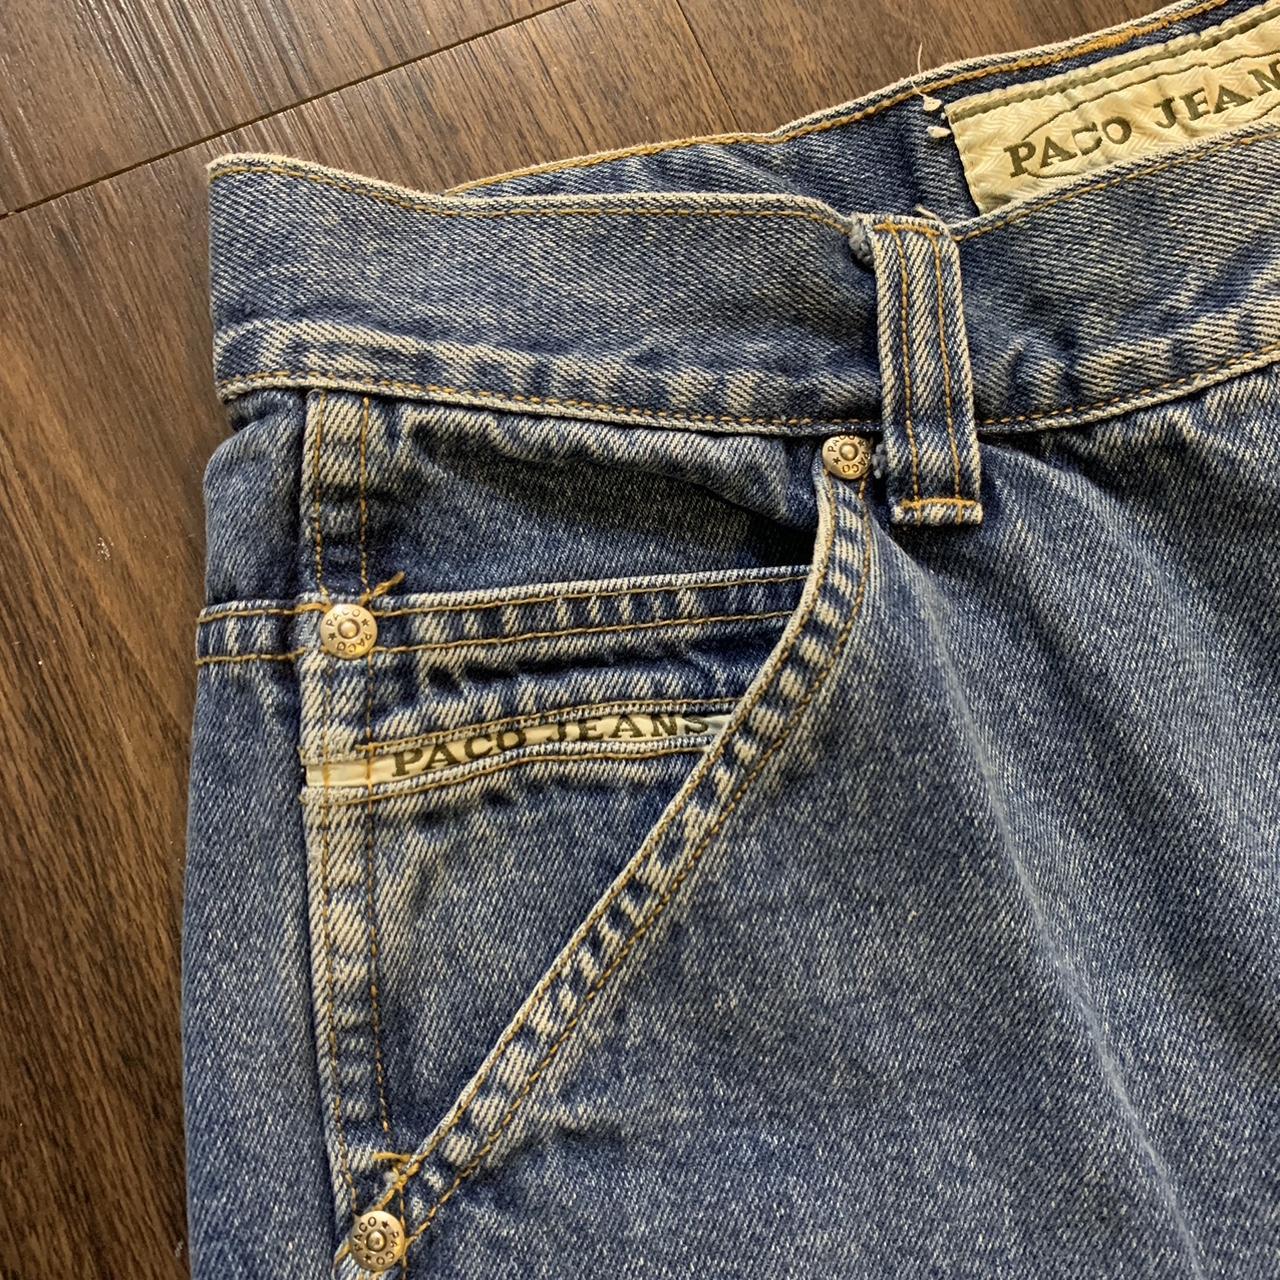 Y2K Paco Jeans jorts, Size 32”. Has a nice faded... - Depop